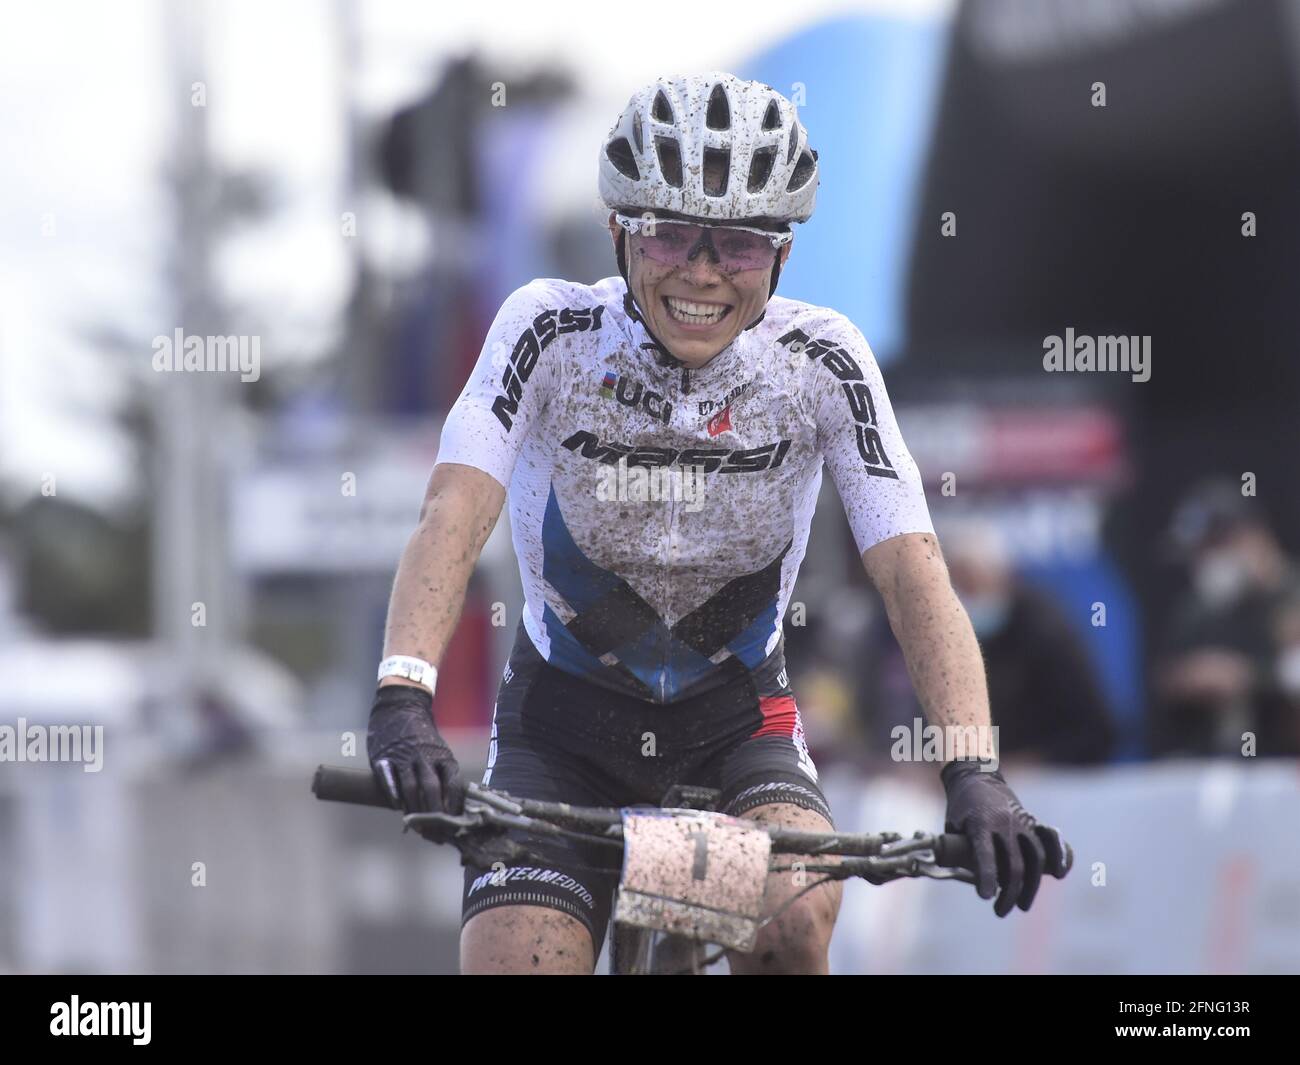 Loana Lecomte (Frankreich) wird am 16. Mai 2021 im Finale des  Cross-Country-Mountainbike-Weltcups der Damen in Nove Mesto na Morave,  Tschechien, gesehen. (CTK Photo/Lubos Pavlicek Stockfotografie - Alamy